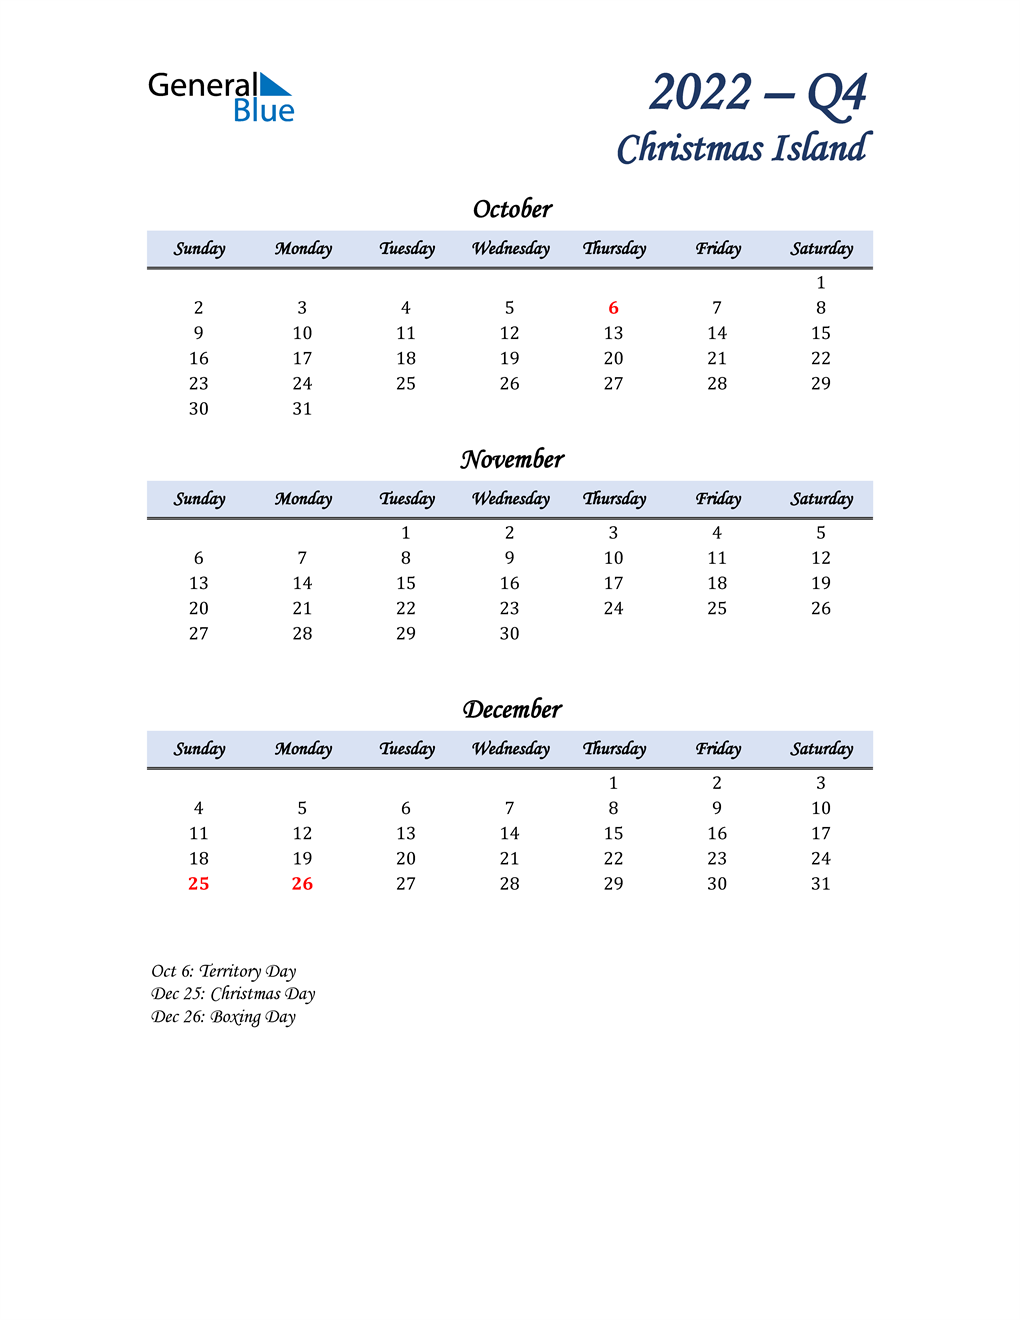  October, November, and December Calendar for Christmas Island